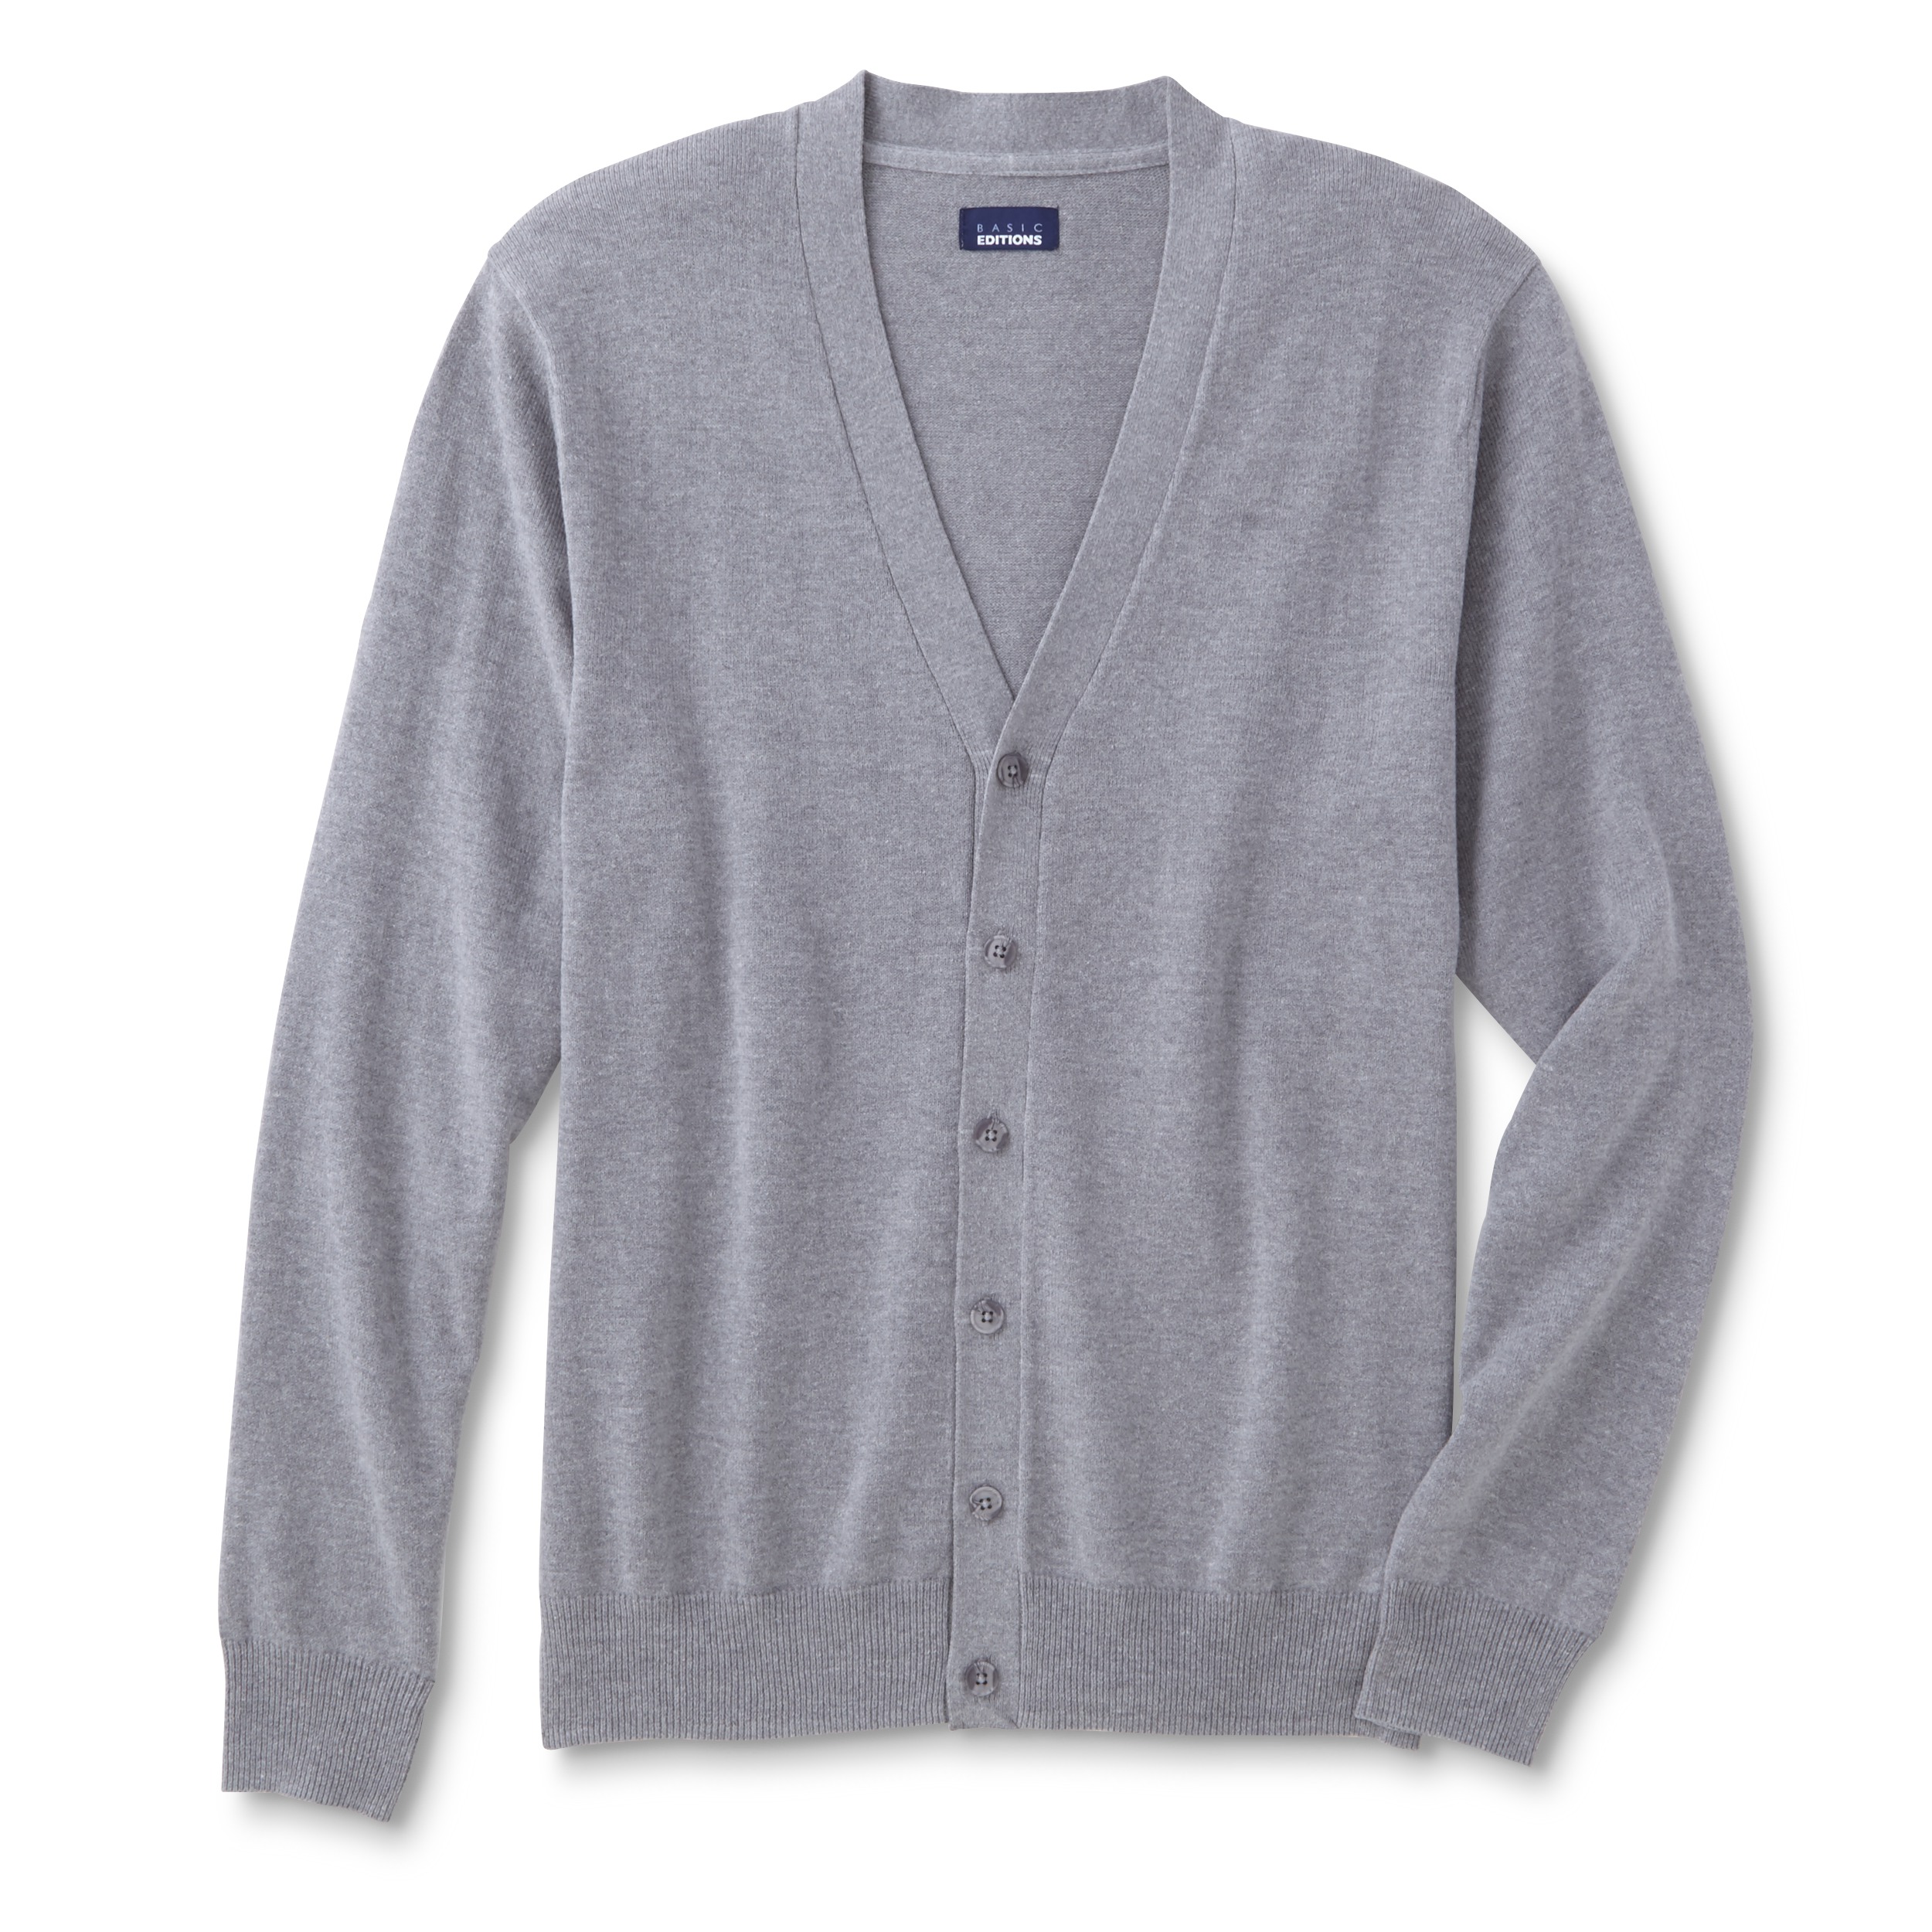 Basic Editions Men's Cardigan Sweater - Kmart